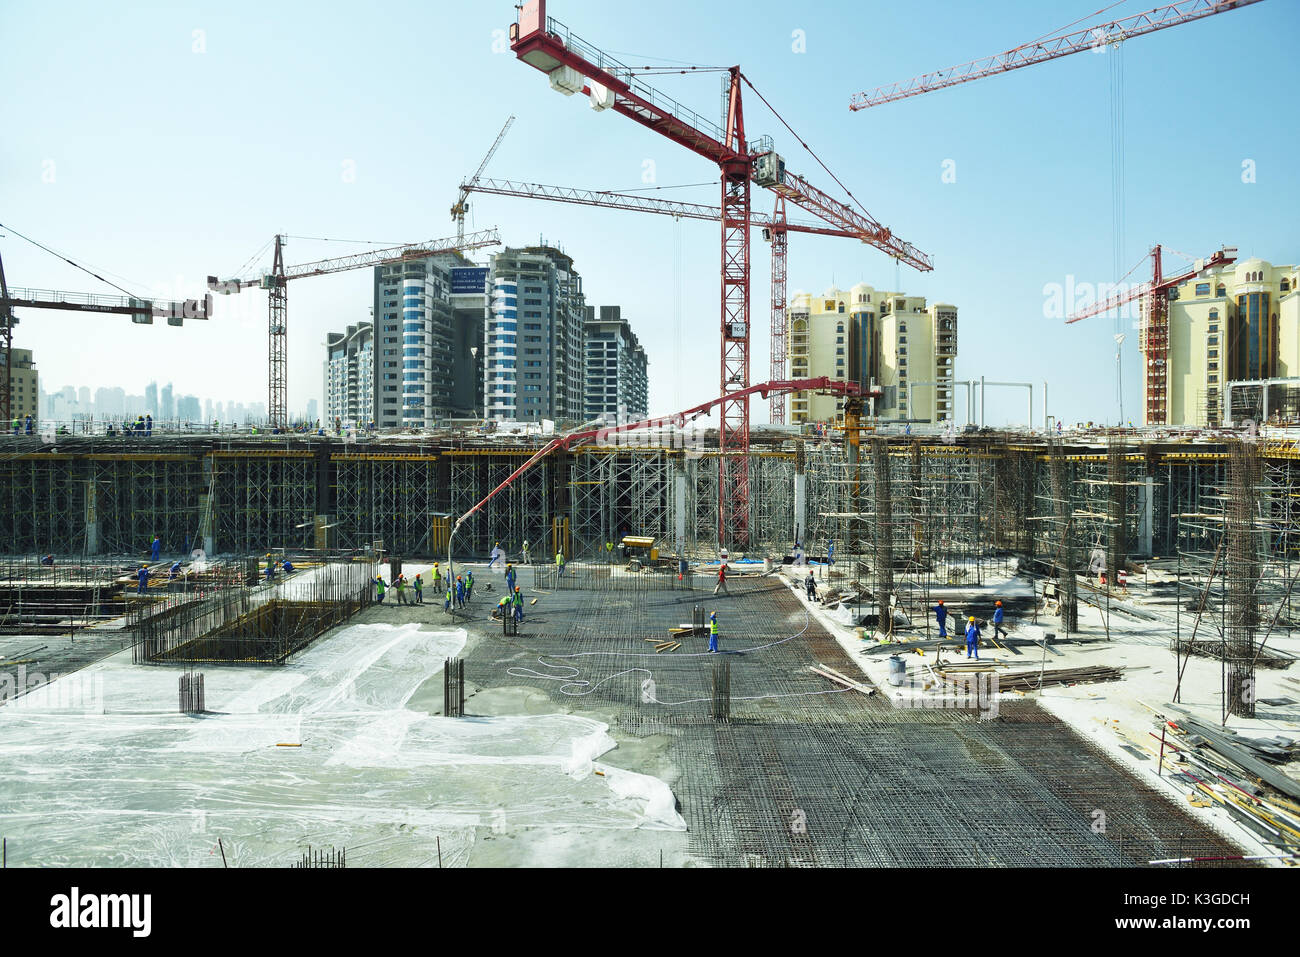 Dubai, United Arab Emirates - Oct 6, 2016: Construction Site at palm island in Dubai Stock Photo